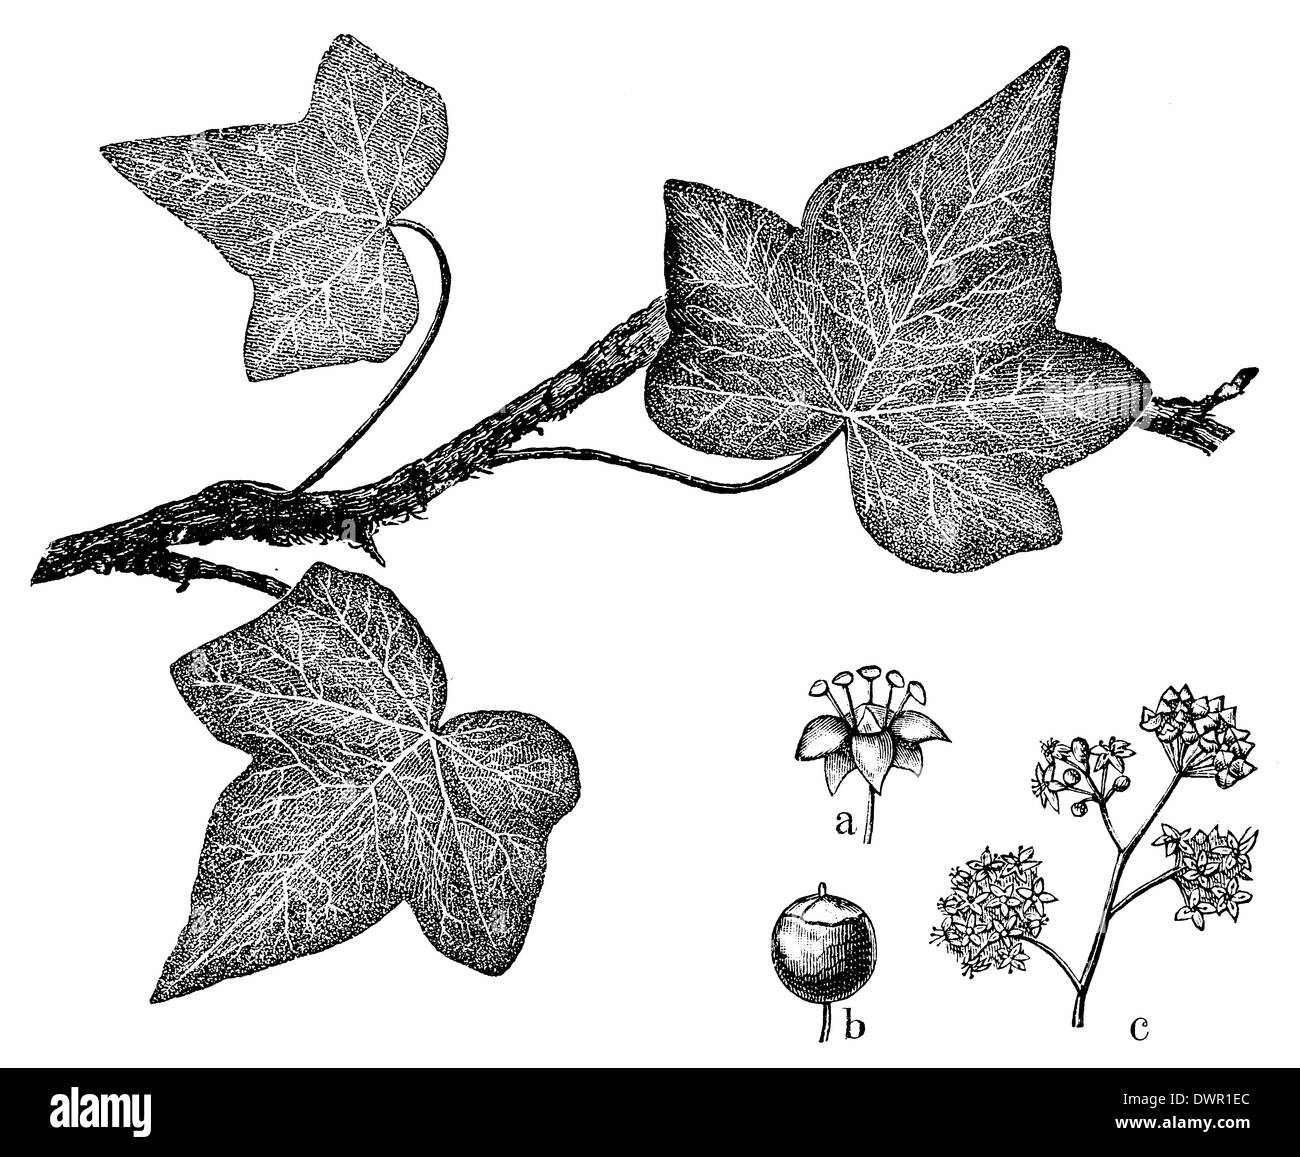 Ivy illustration Black and White Stock Photos & Images - Alamy